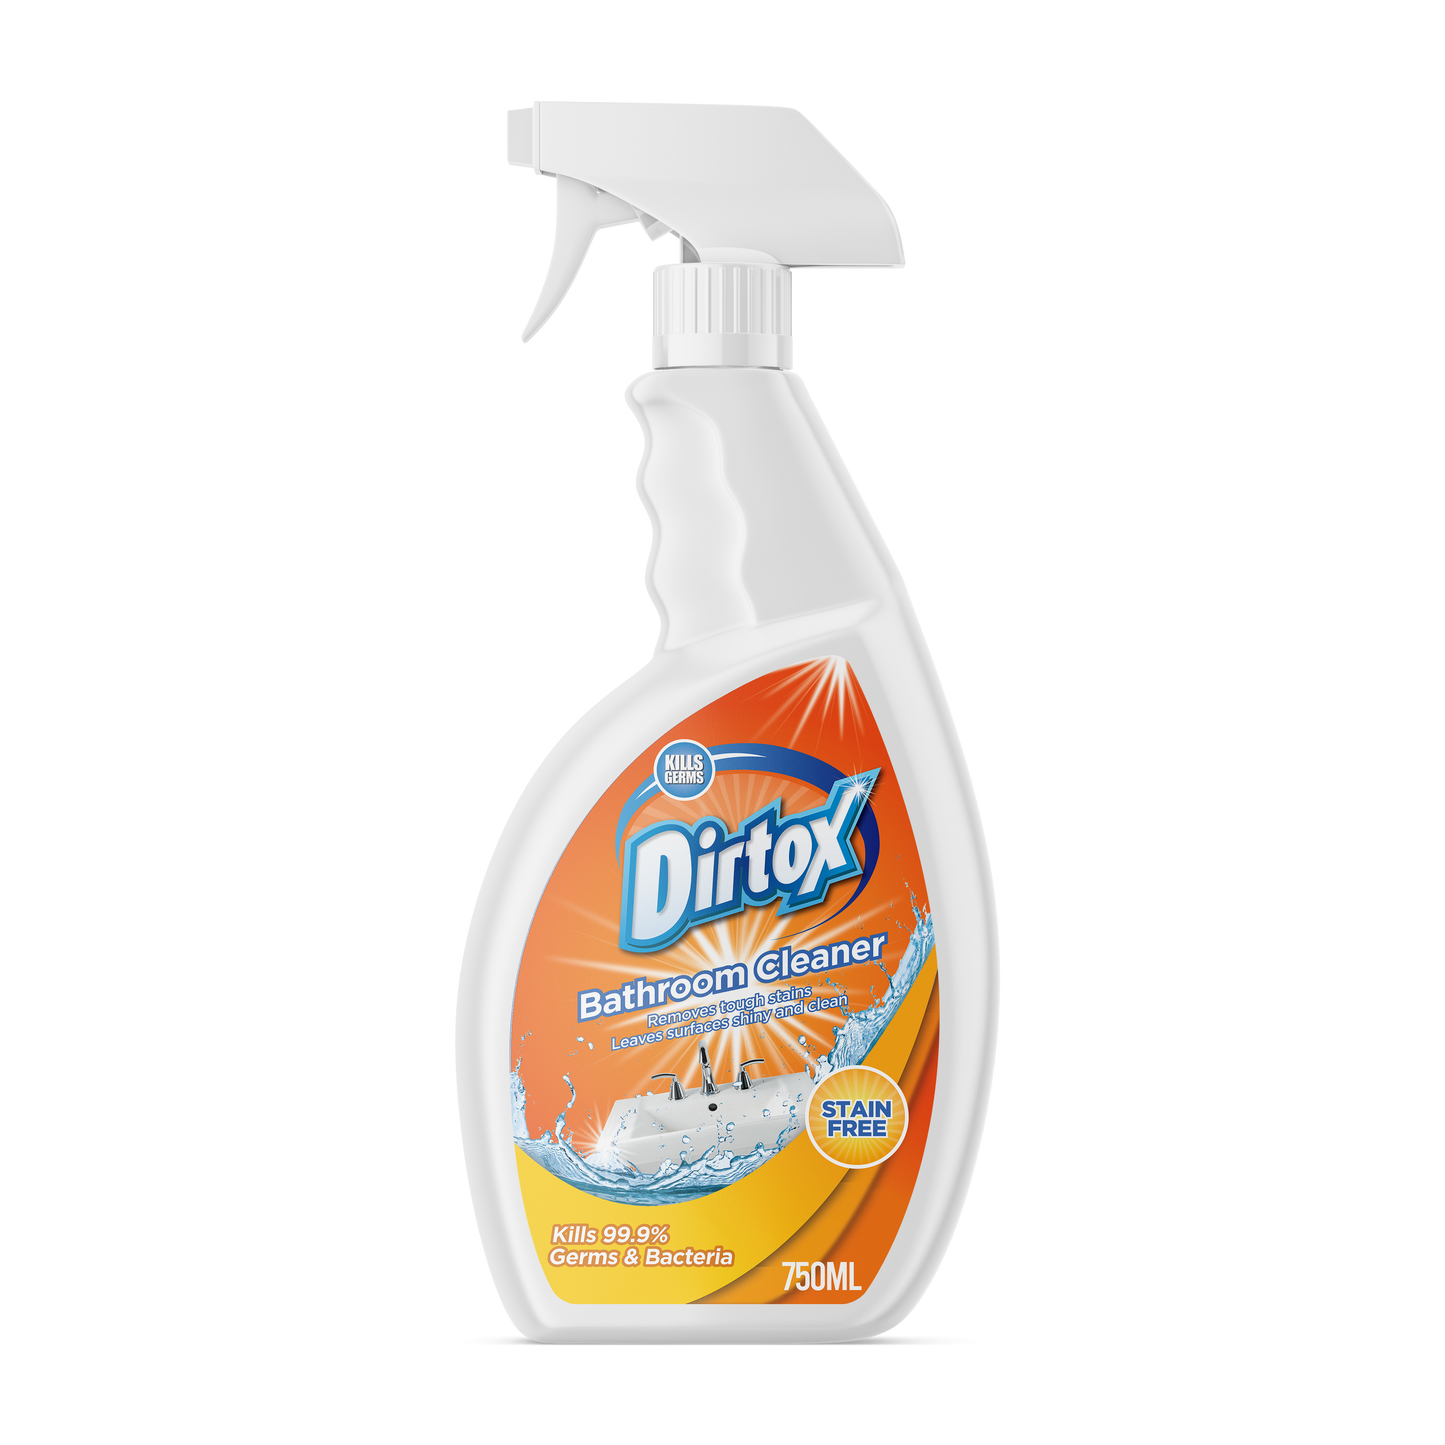 Dirtox Bathroom Cleaner